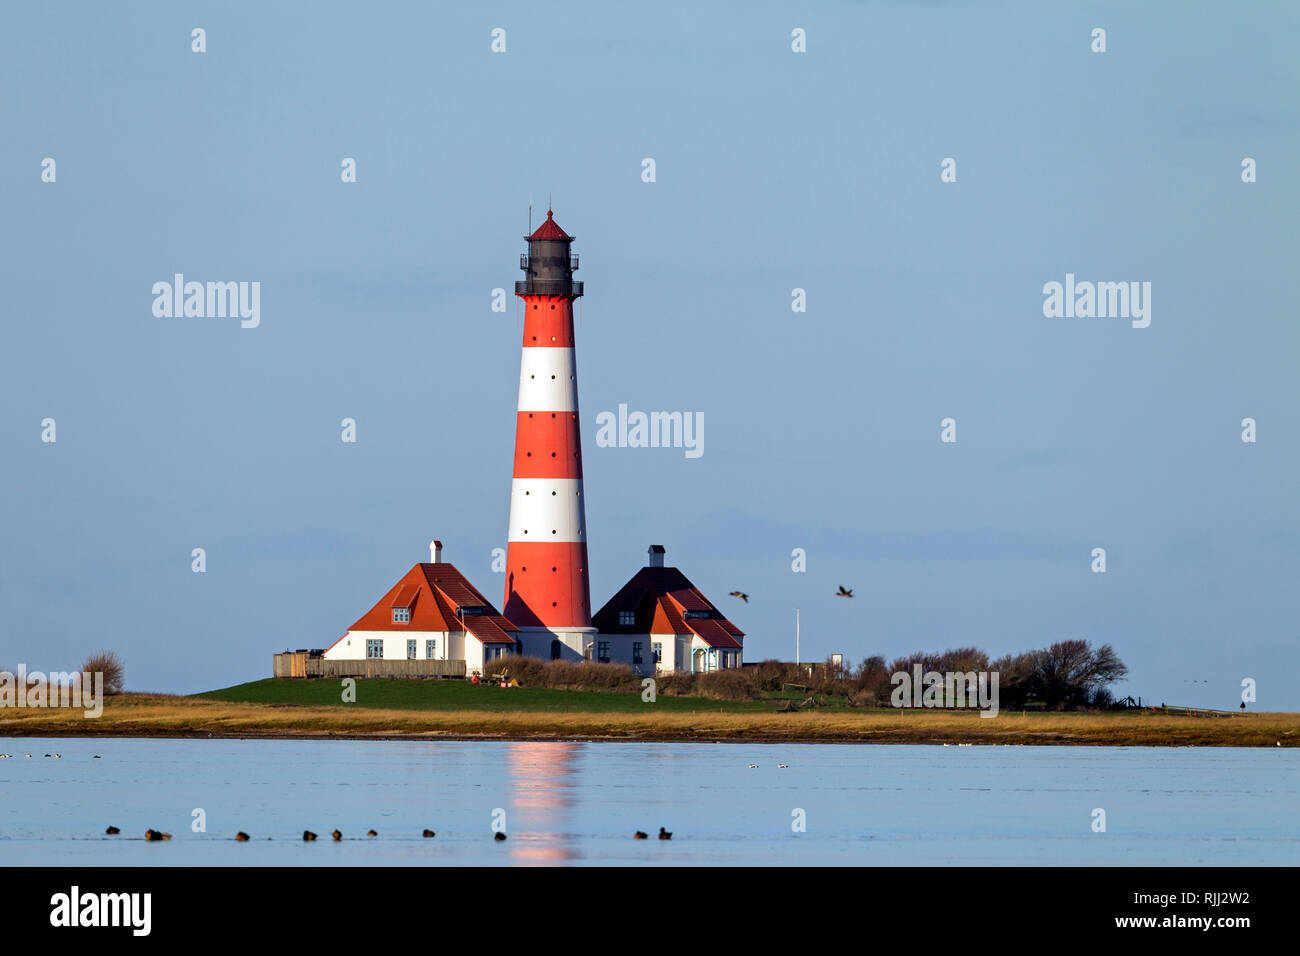 Il Lighthouse Westerheversand. Penisola di Eiderstedt, Frisia settentrionale, Germania Foto Stock